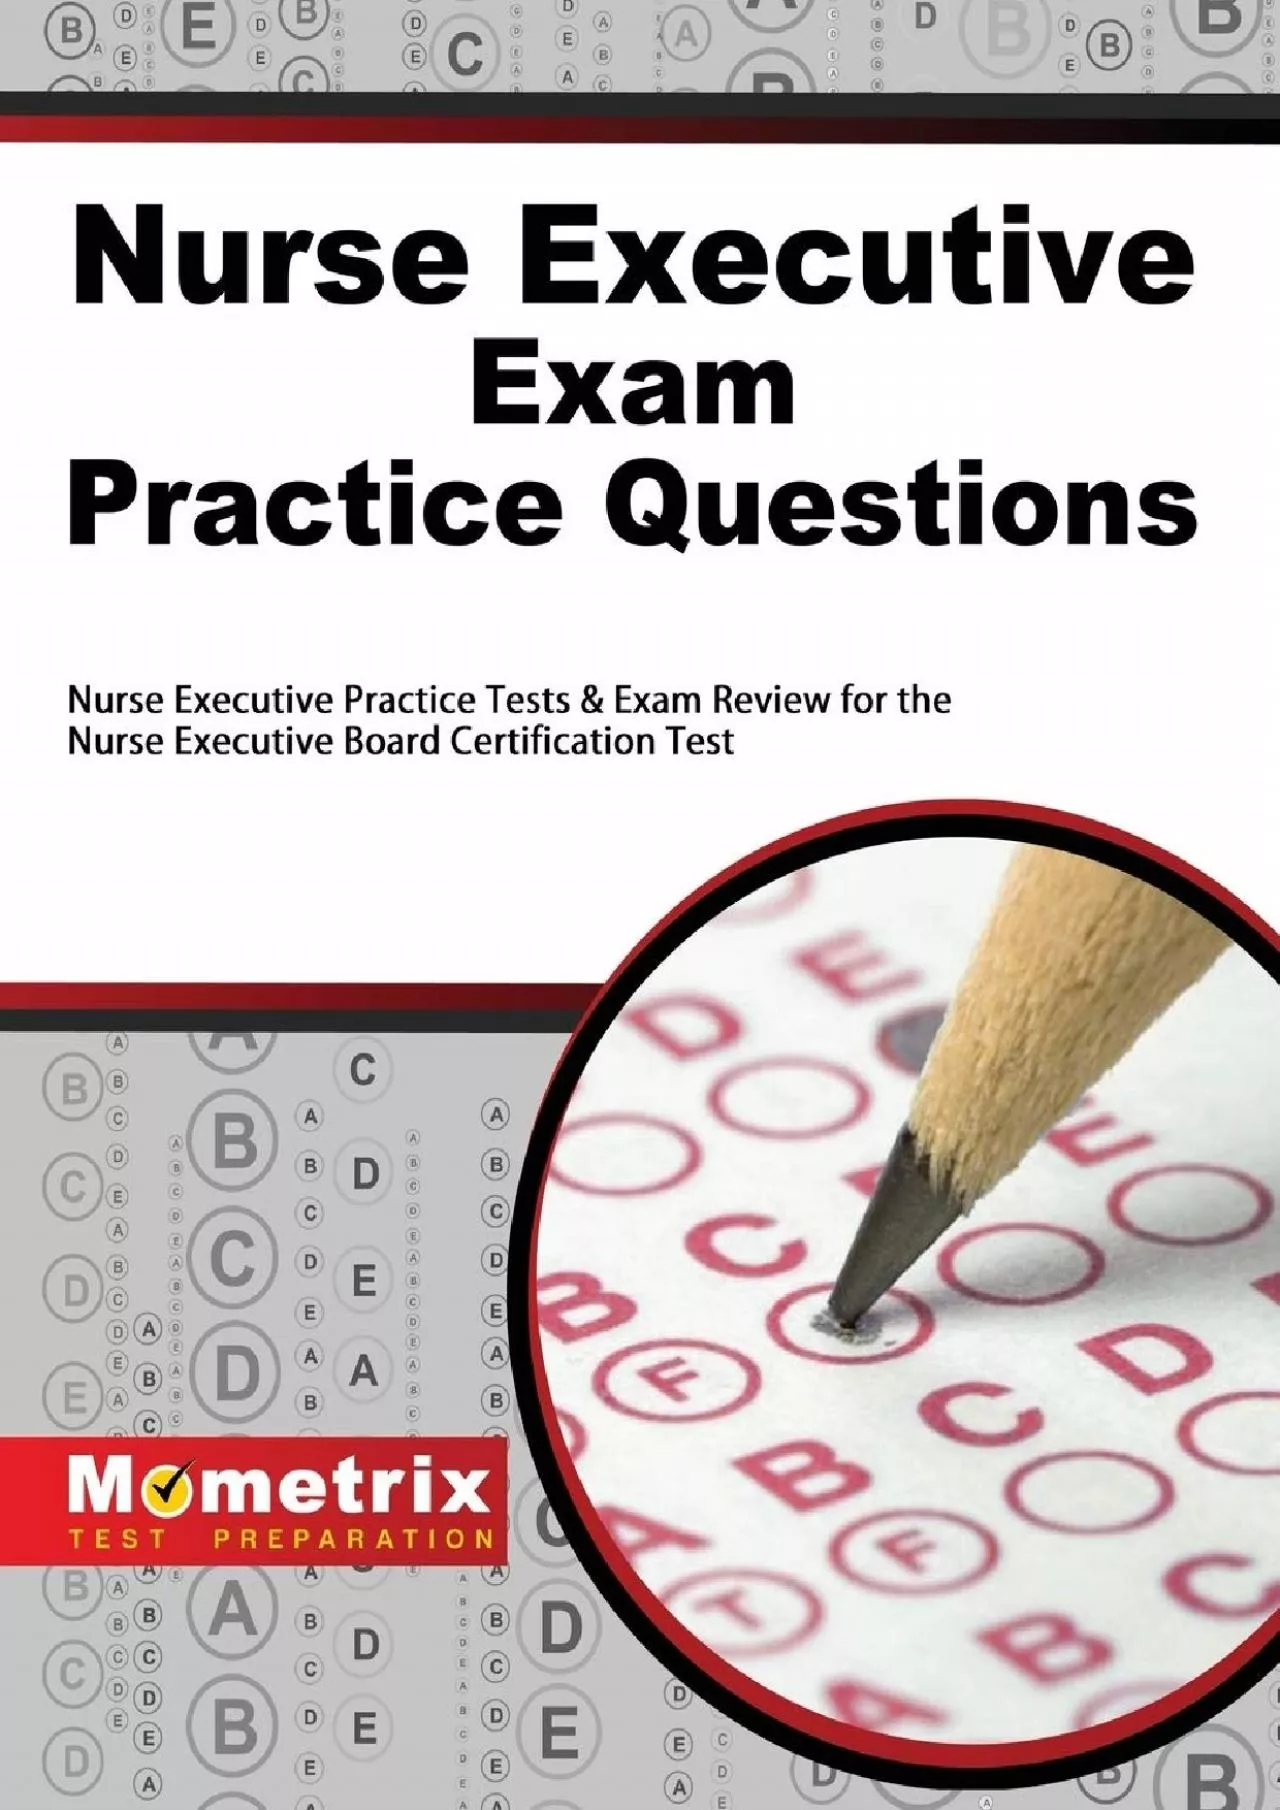 [DOWNLOAD] Nurse Executive Exam Practice Questions: Nurse Executive Practice Tests  Exam